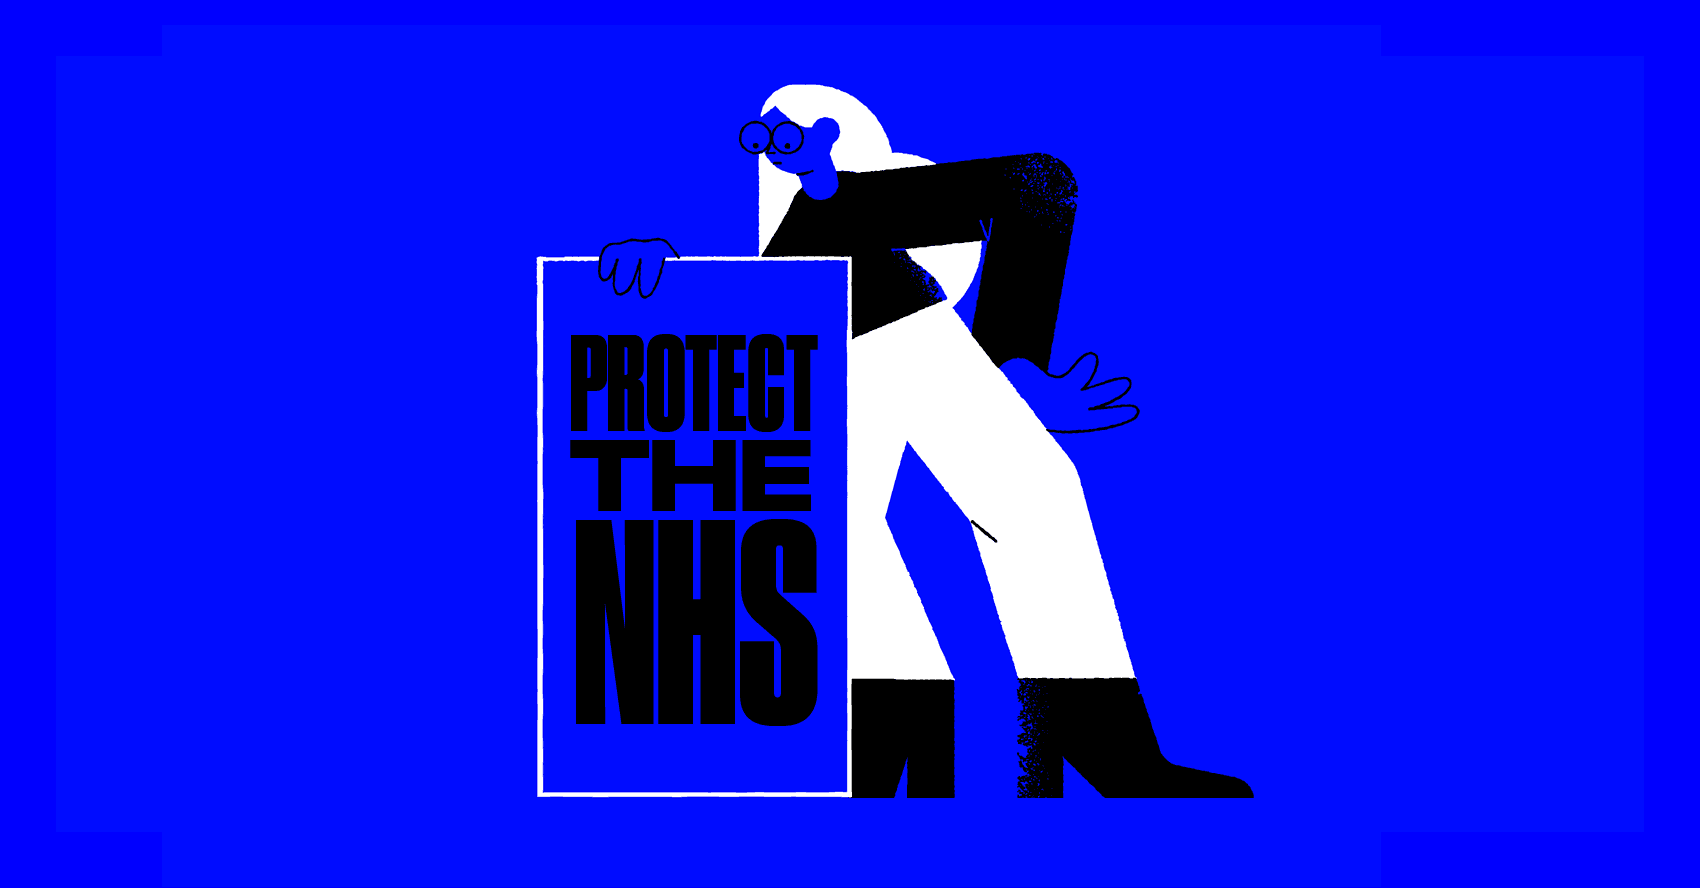 Protect NHS